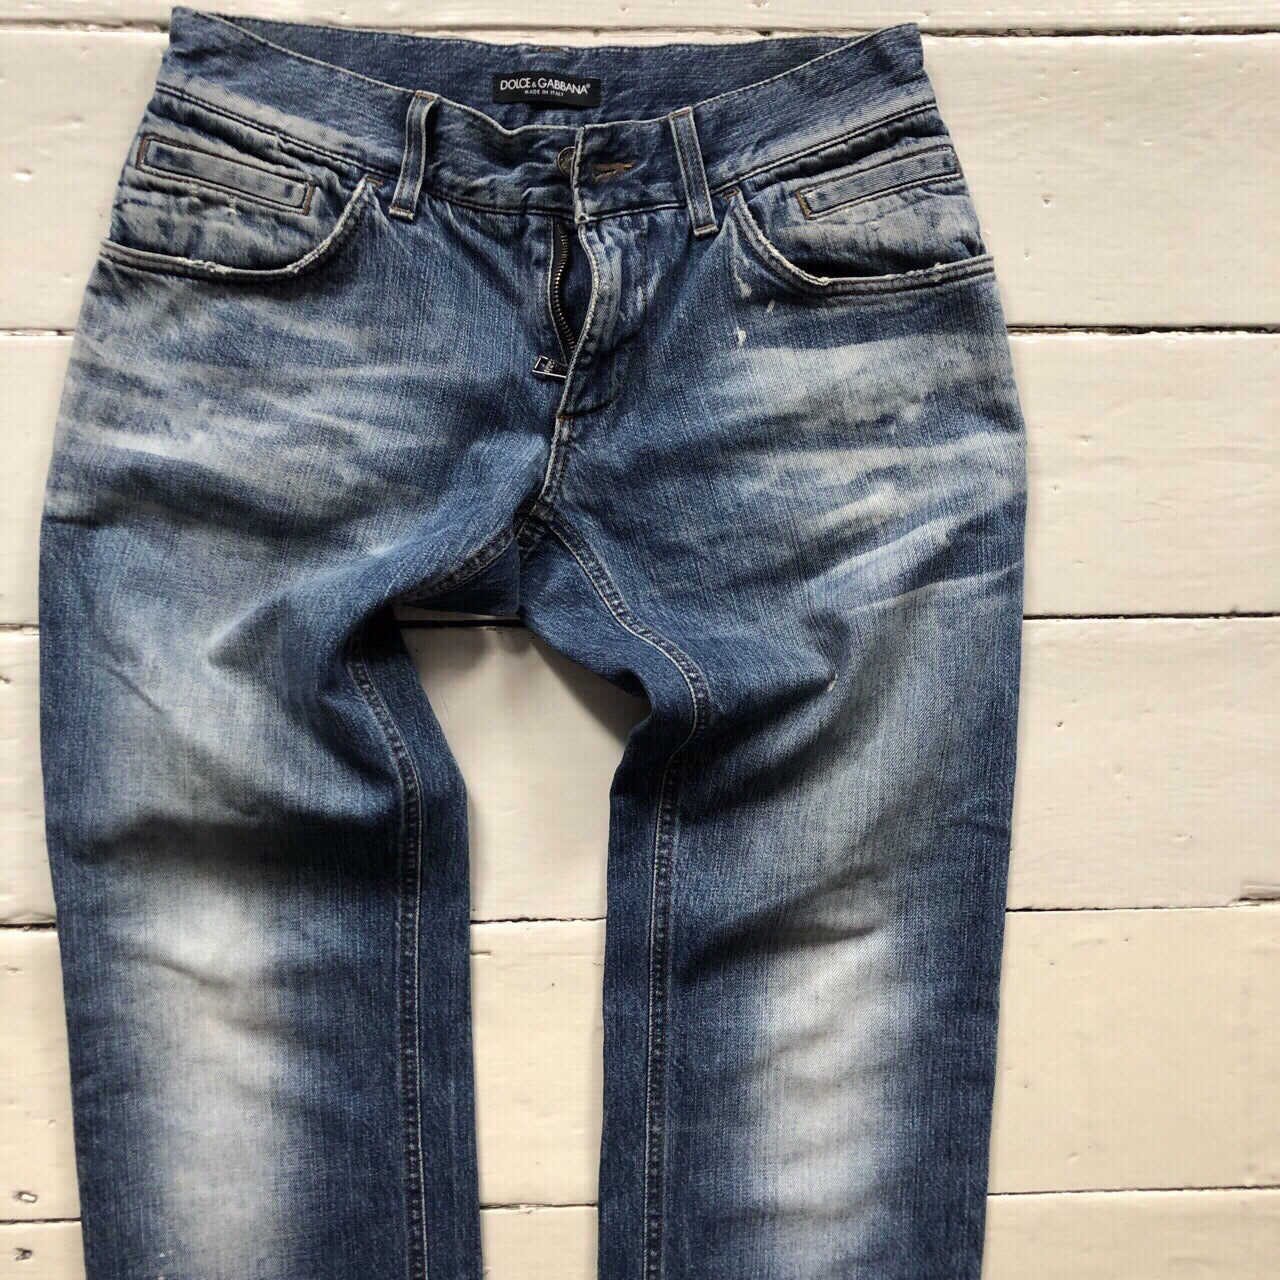 Dolce & Gabbana Stonewashed Jeans (32/32)